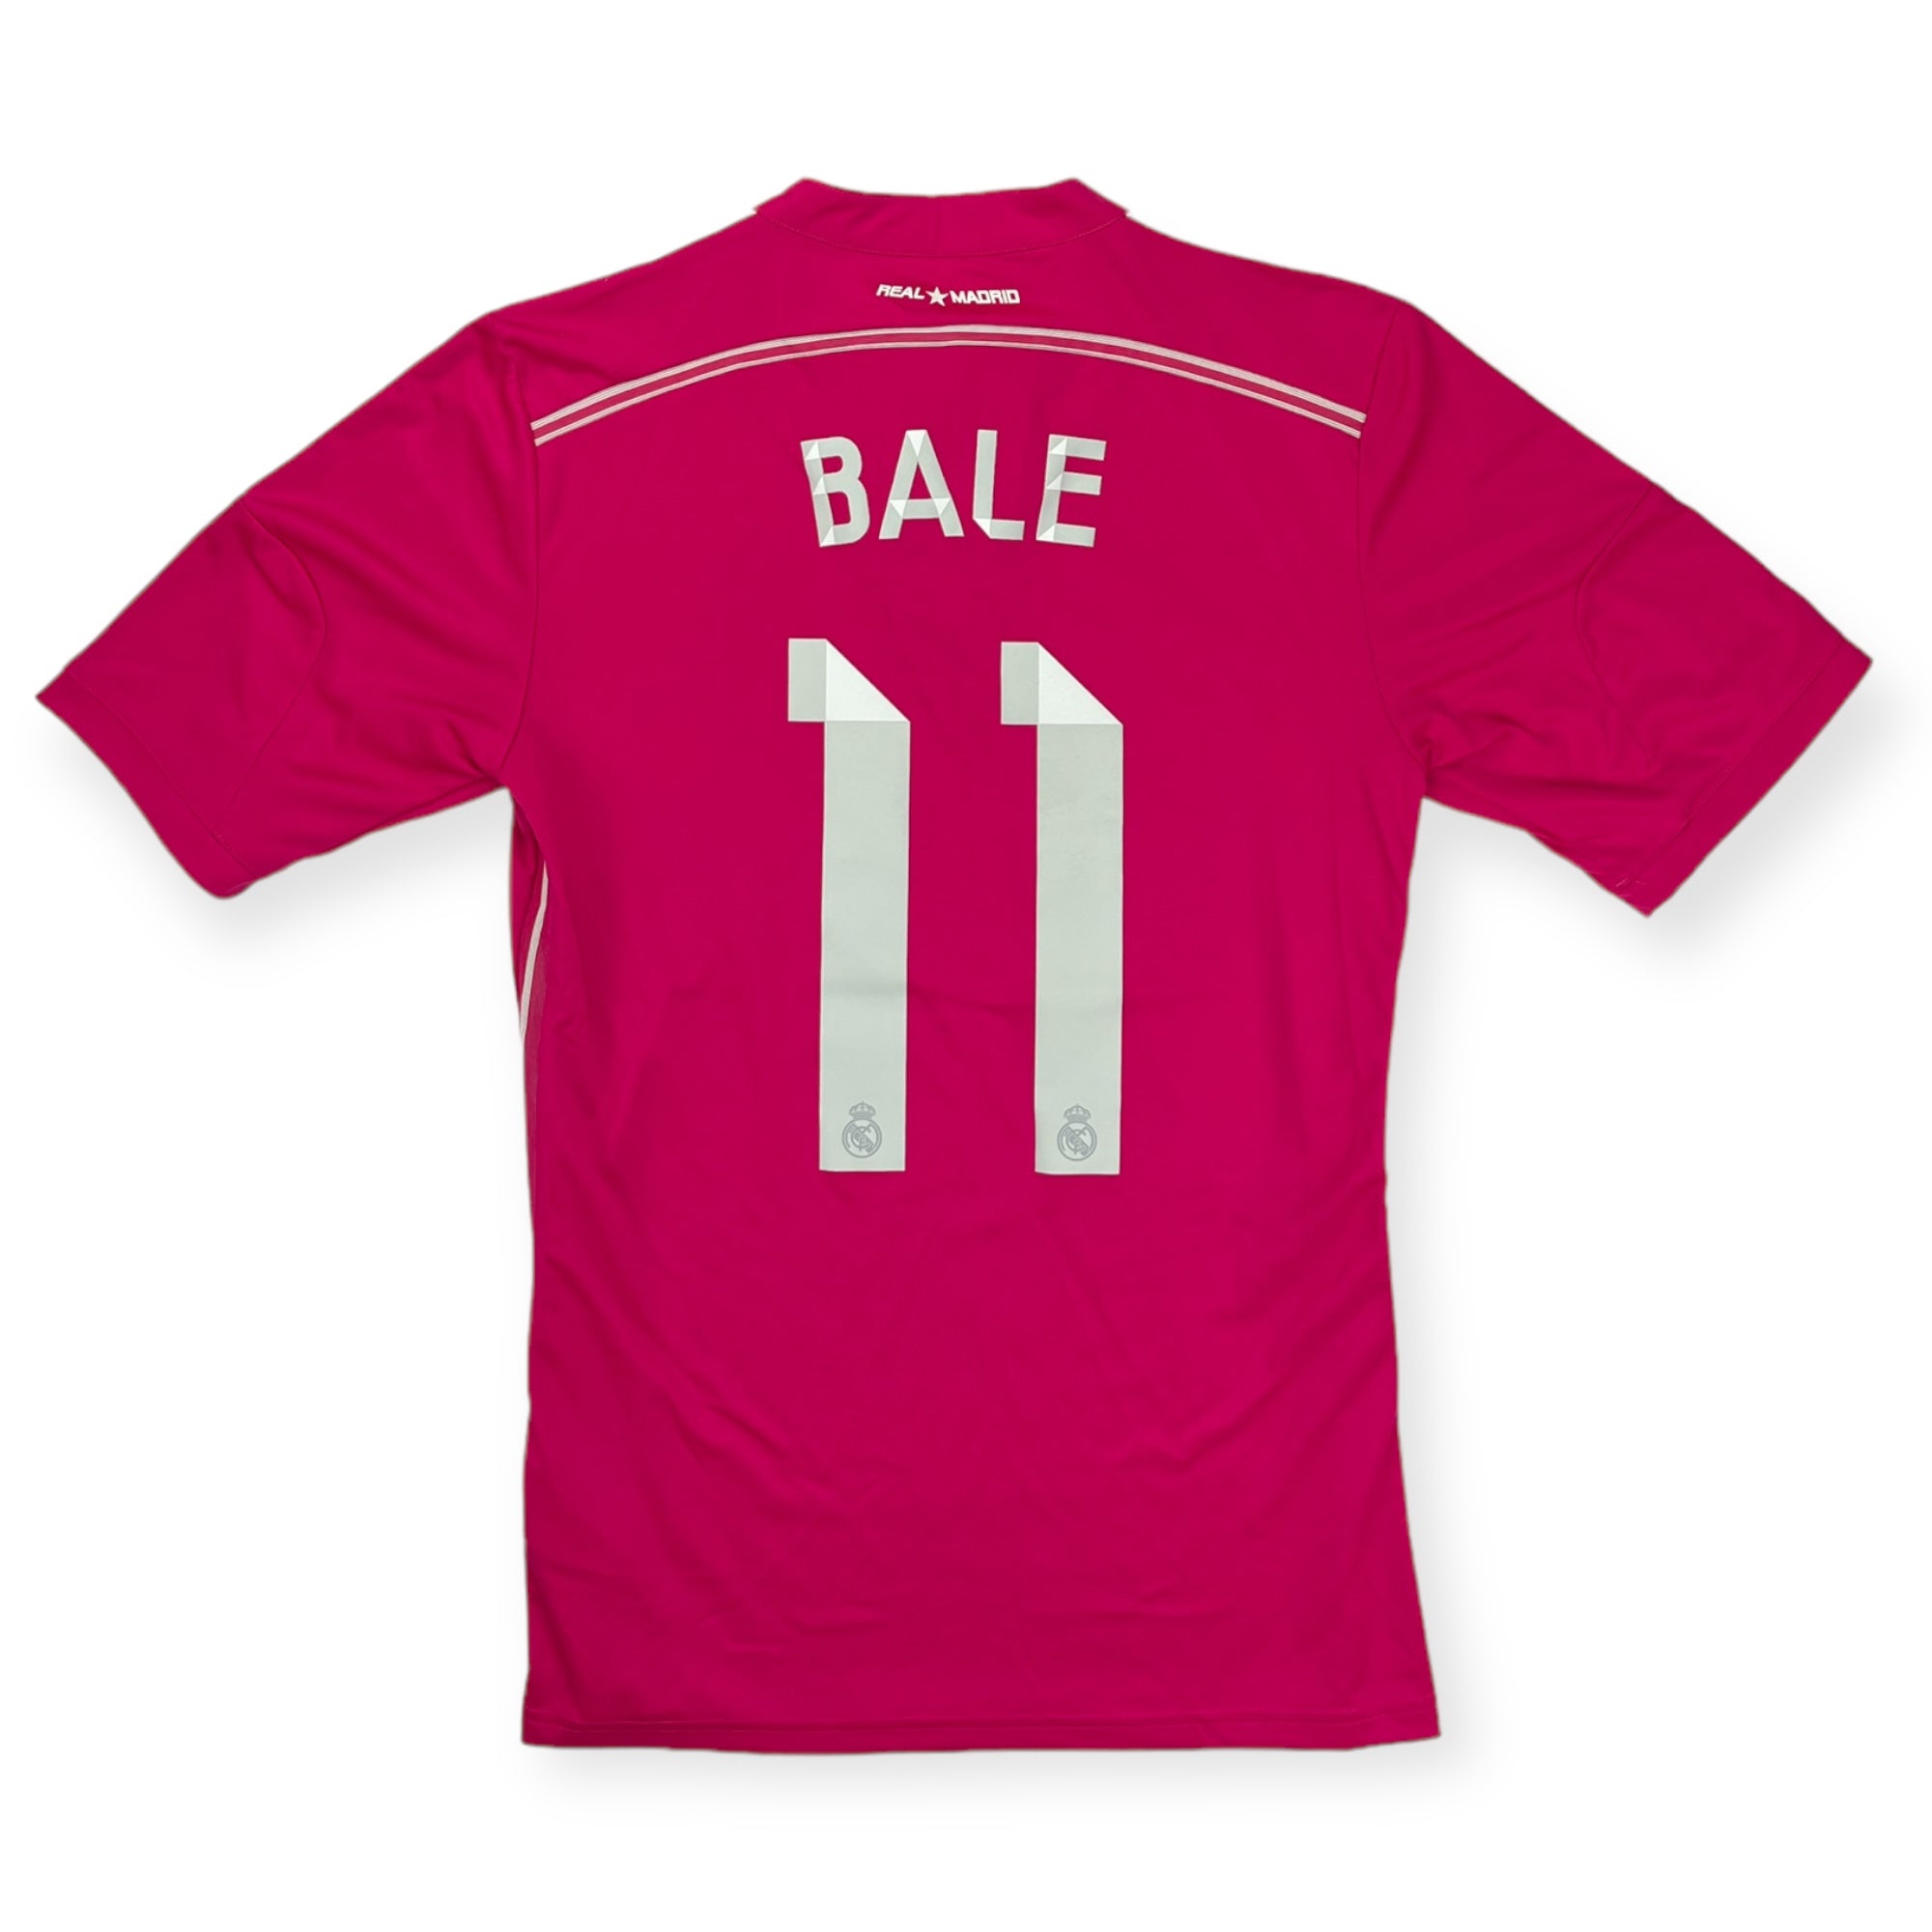 Real Madrid 2014 Away Shirt, Bale 11